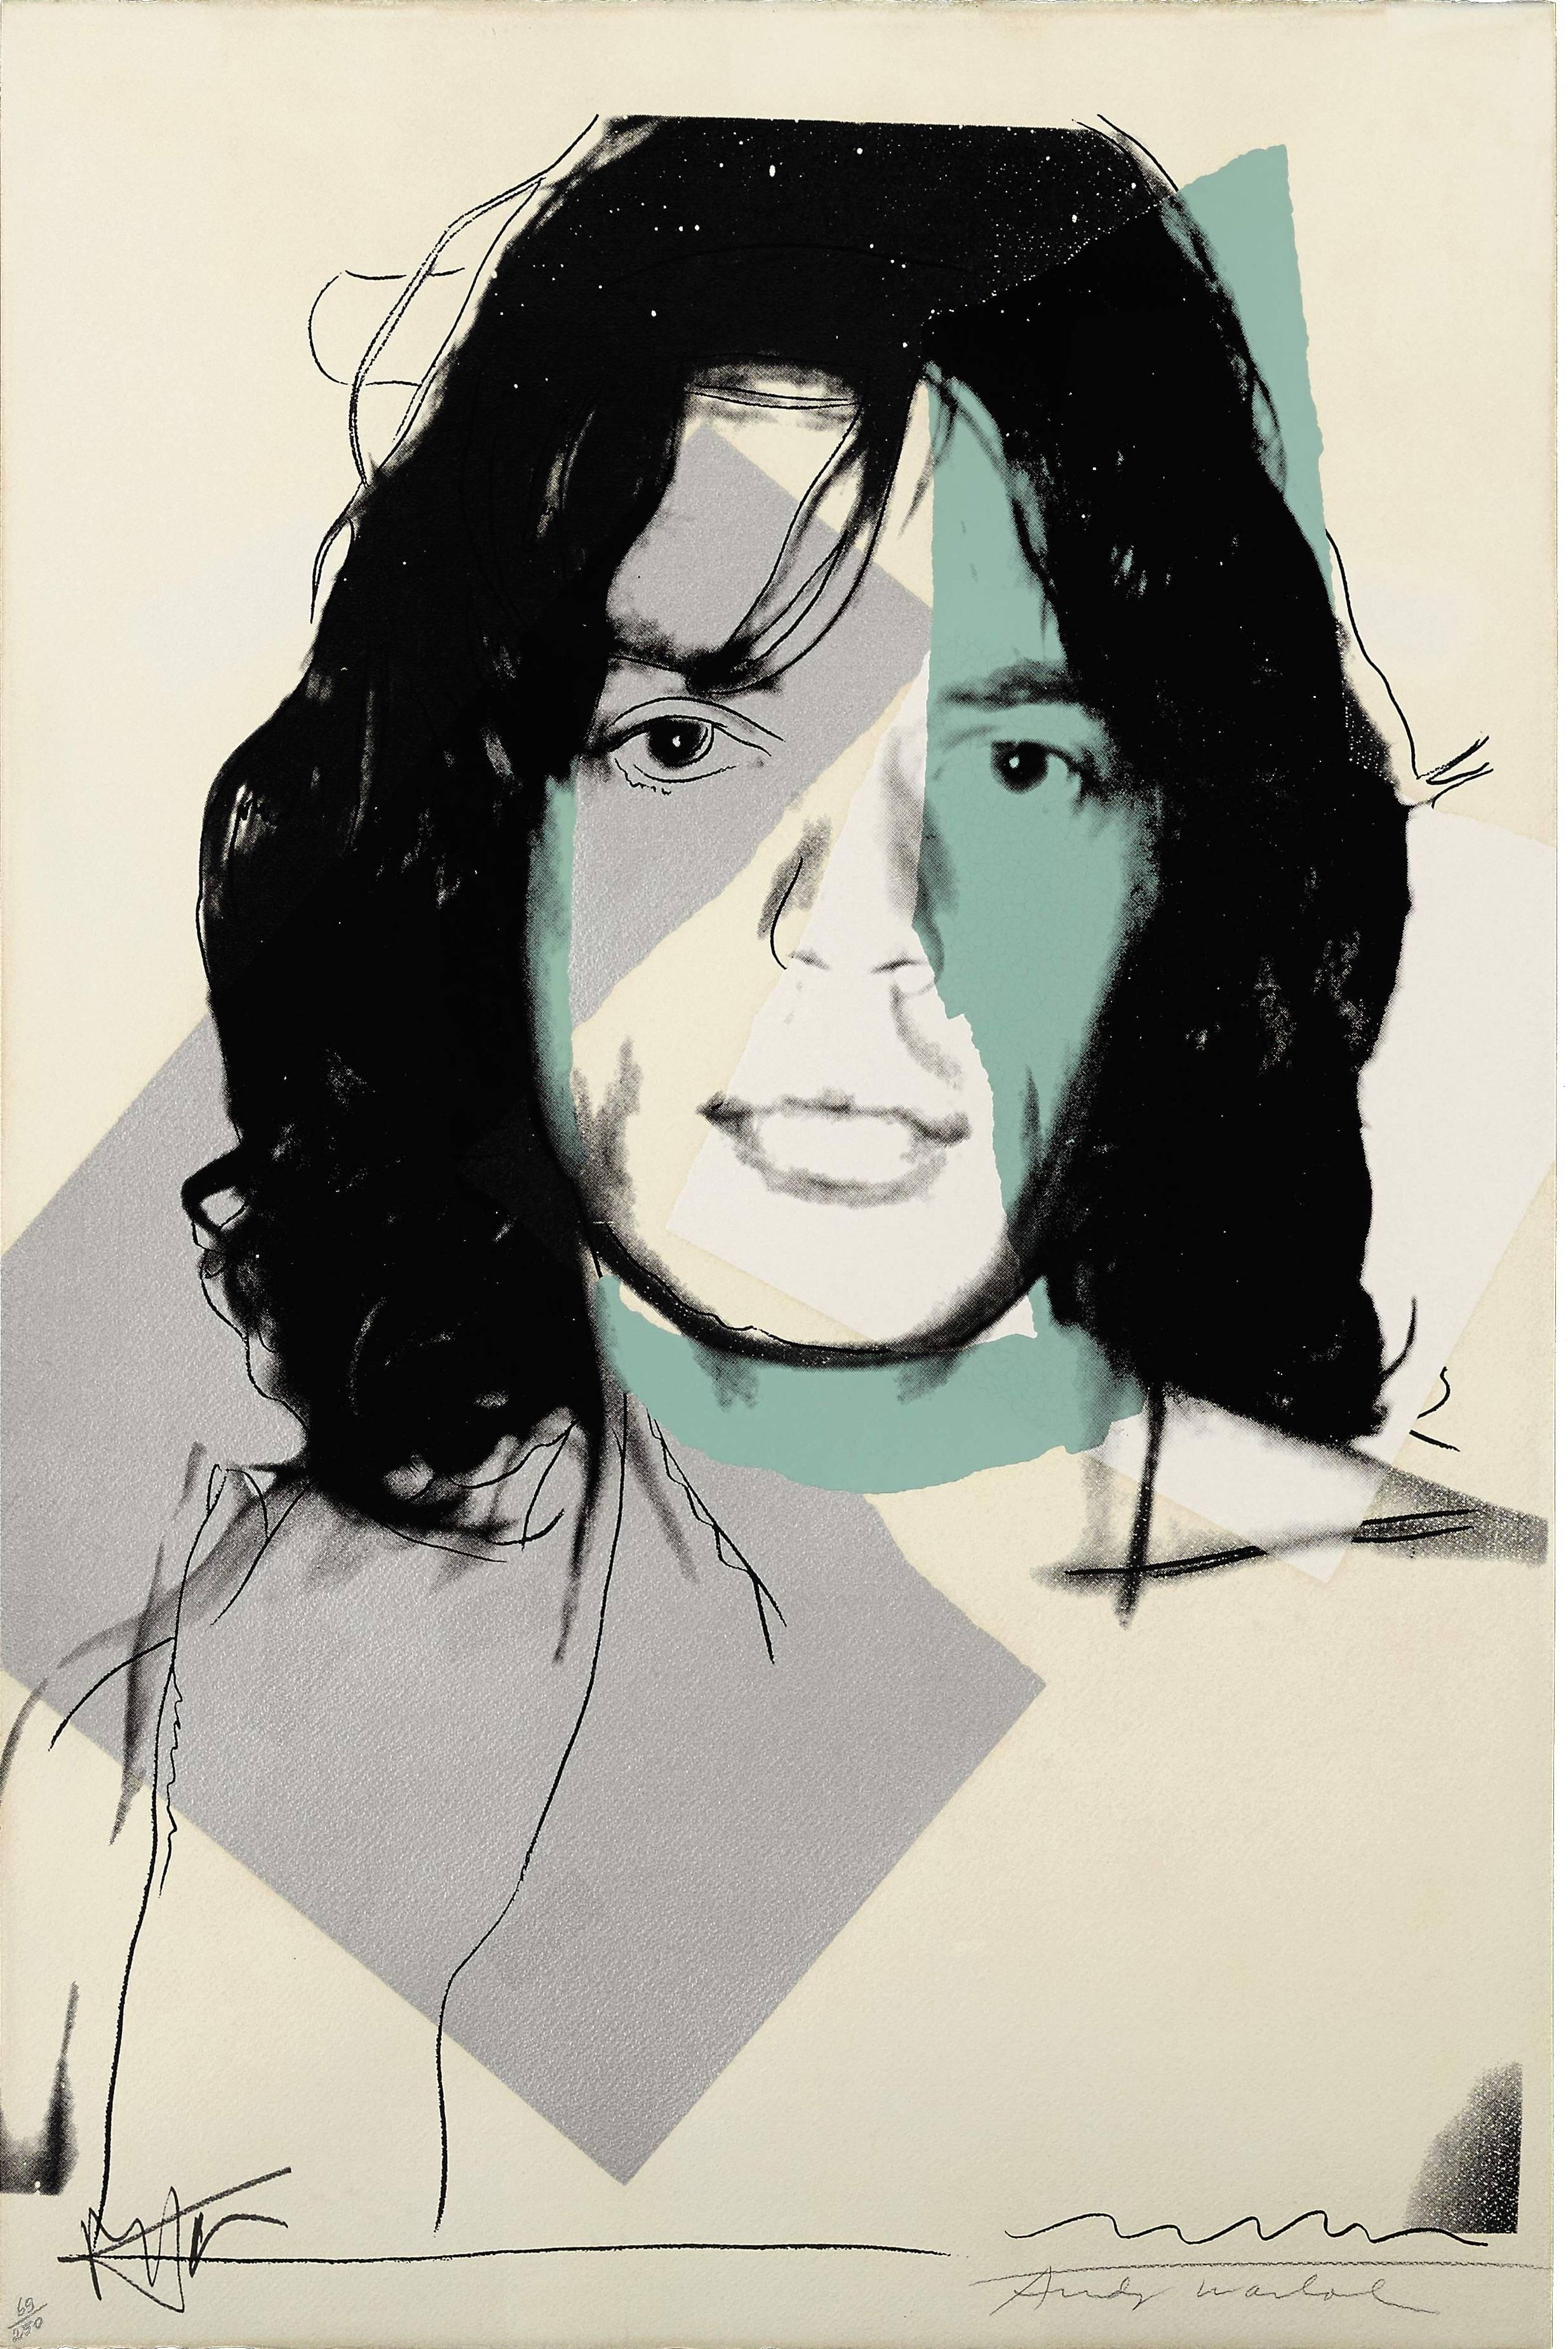 Andy Warhol Figurative Print - Mick Jagger II.138